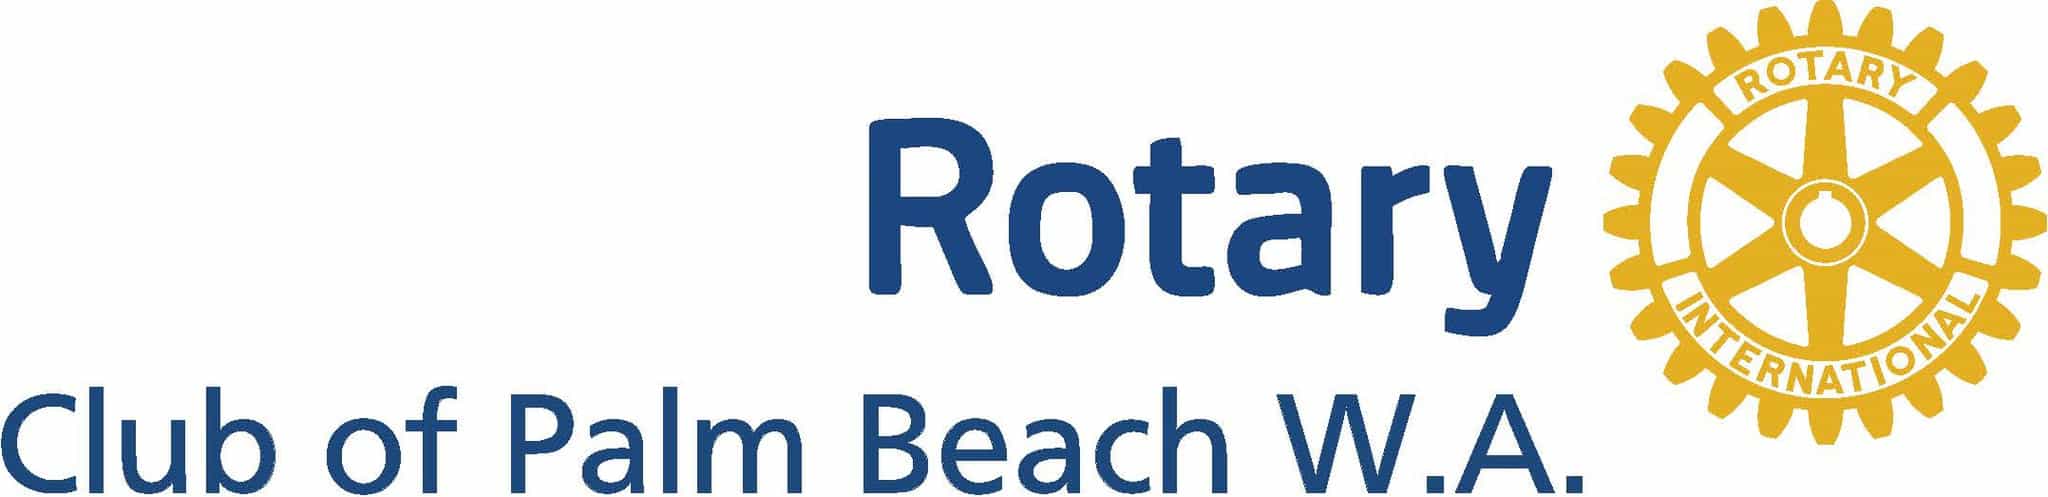 https://rockinghambeachcup.com.au/wp-content/uploads/2019/07/Rotary-Club-of-Palm-Beach-New-Logo.jpg